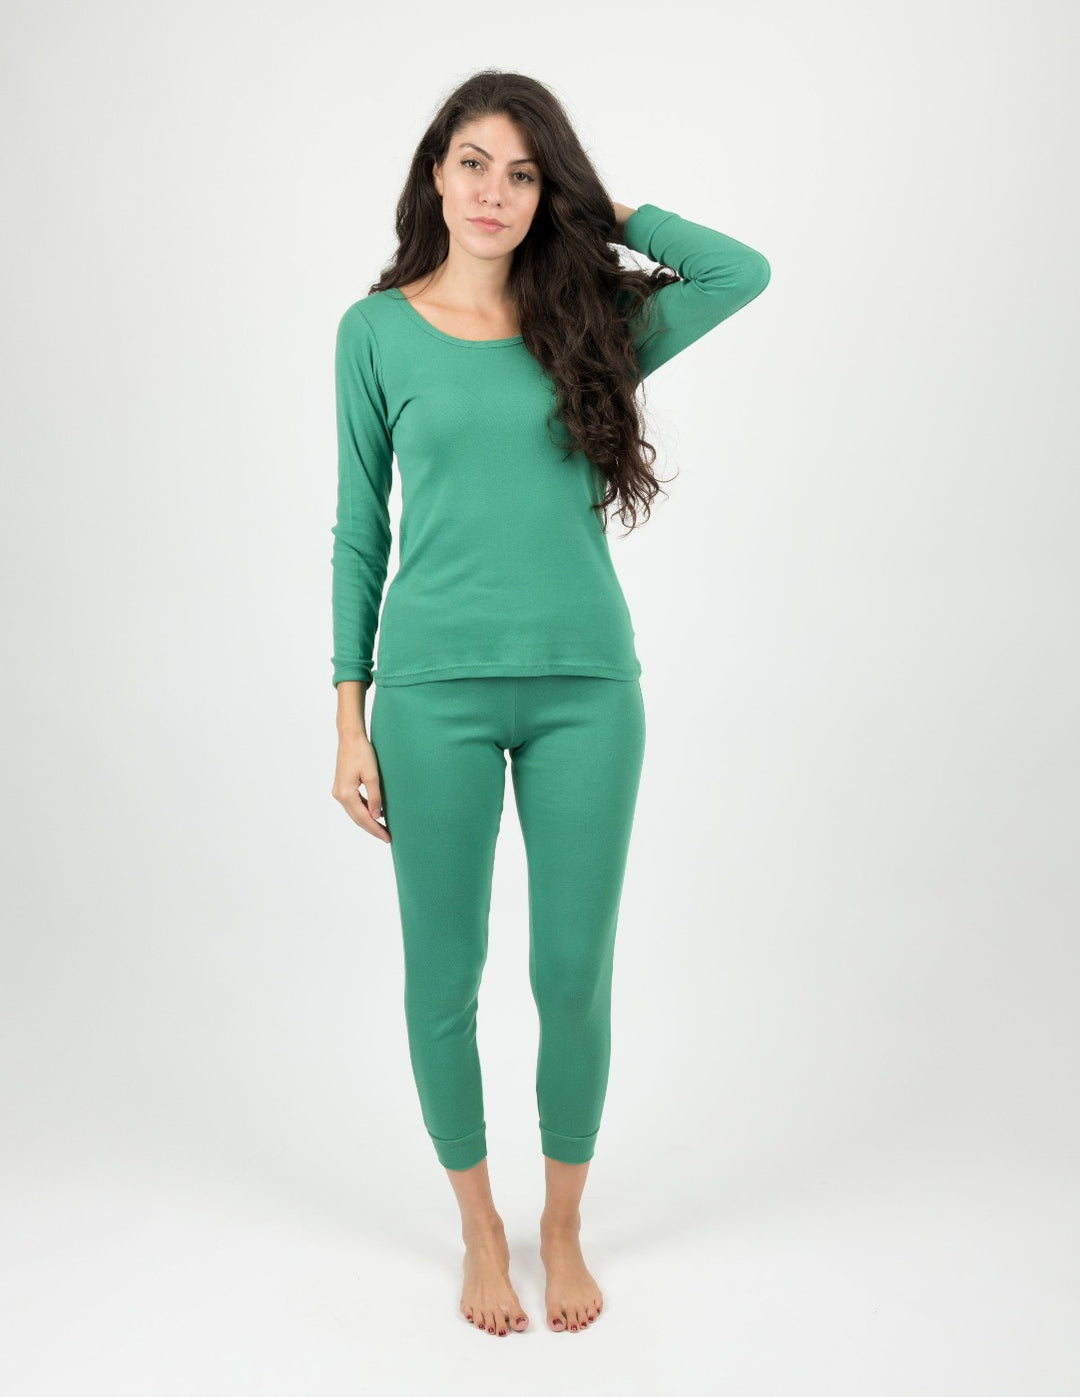 solid color green women's cotton pajamas